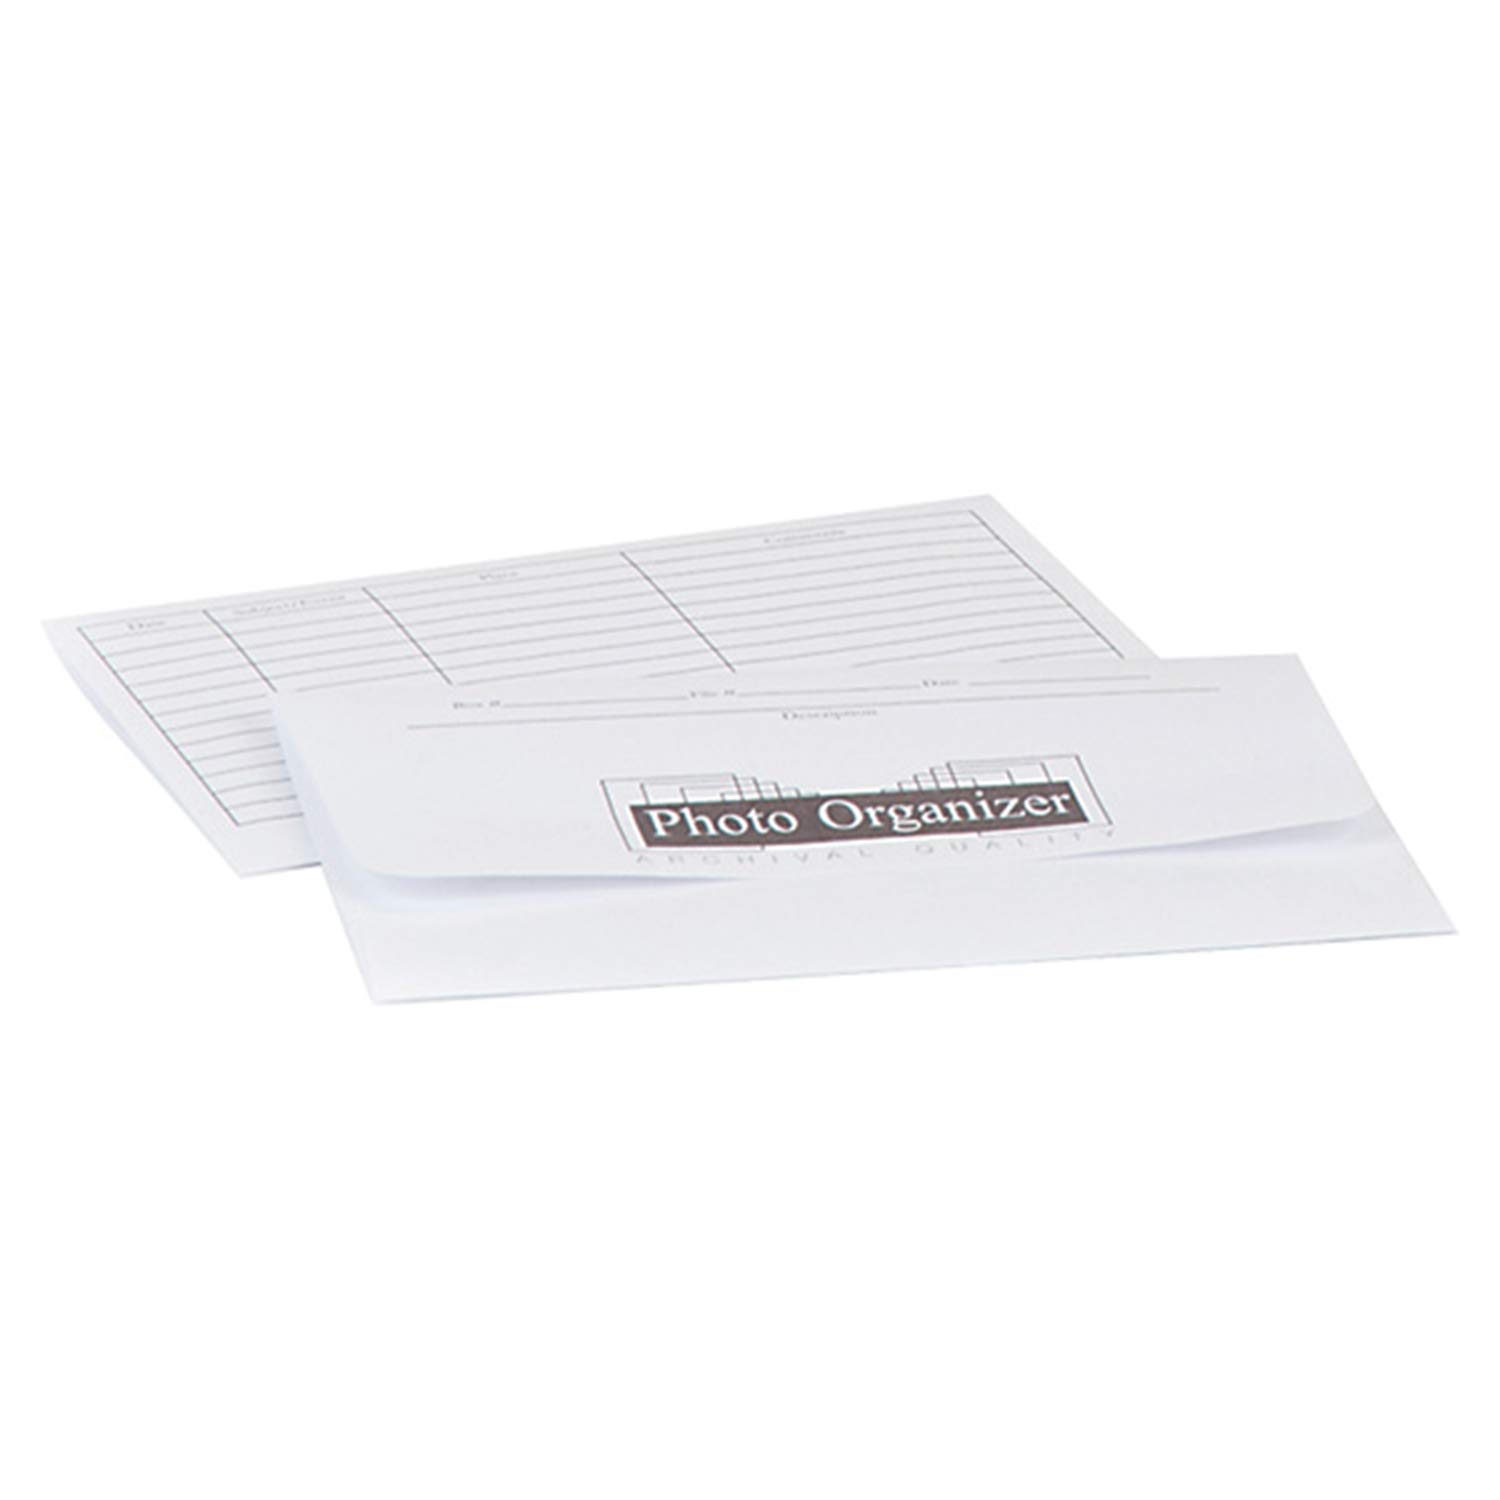 Online filing form and a stack of envelopes